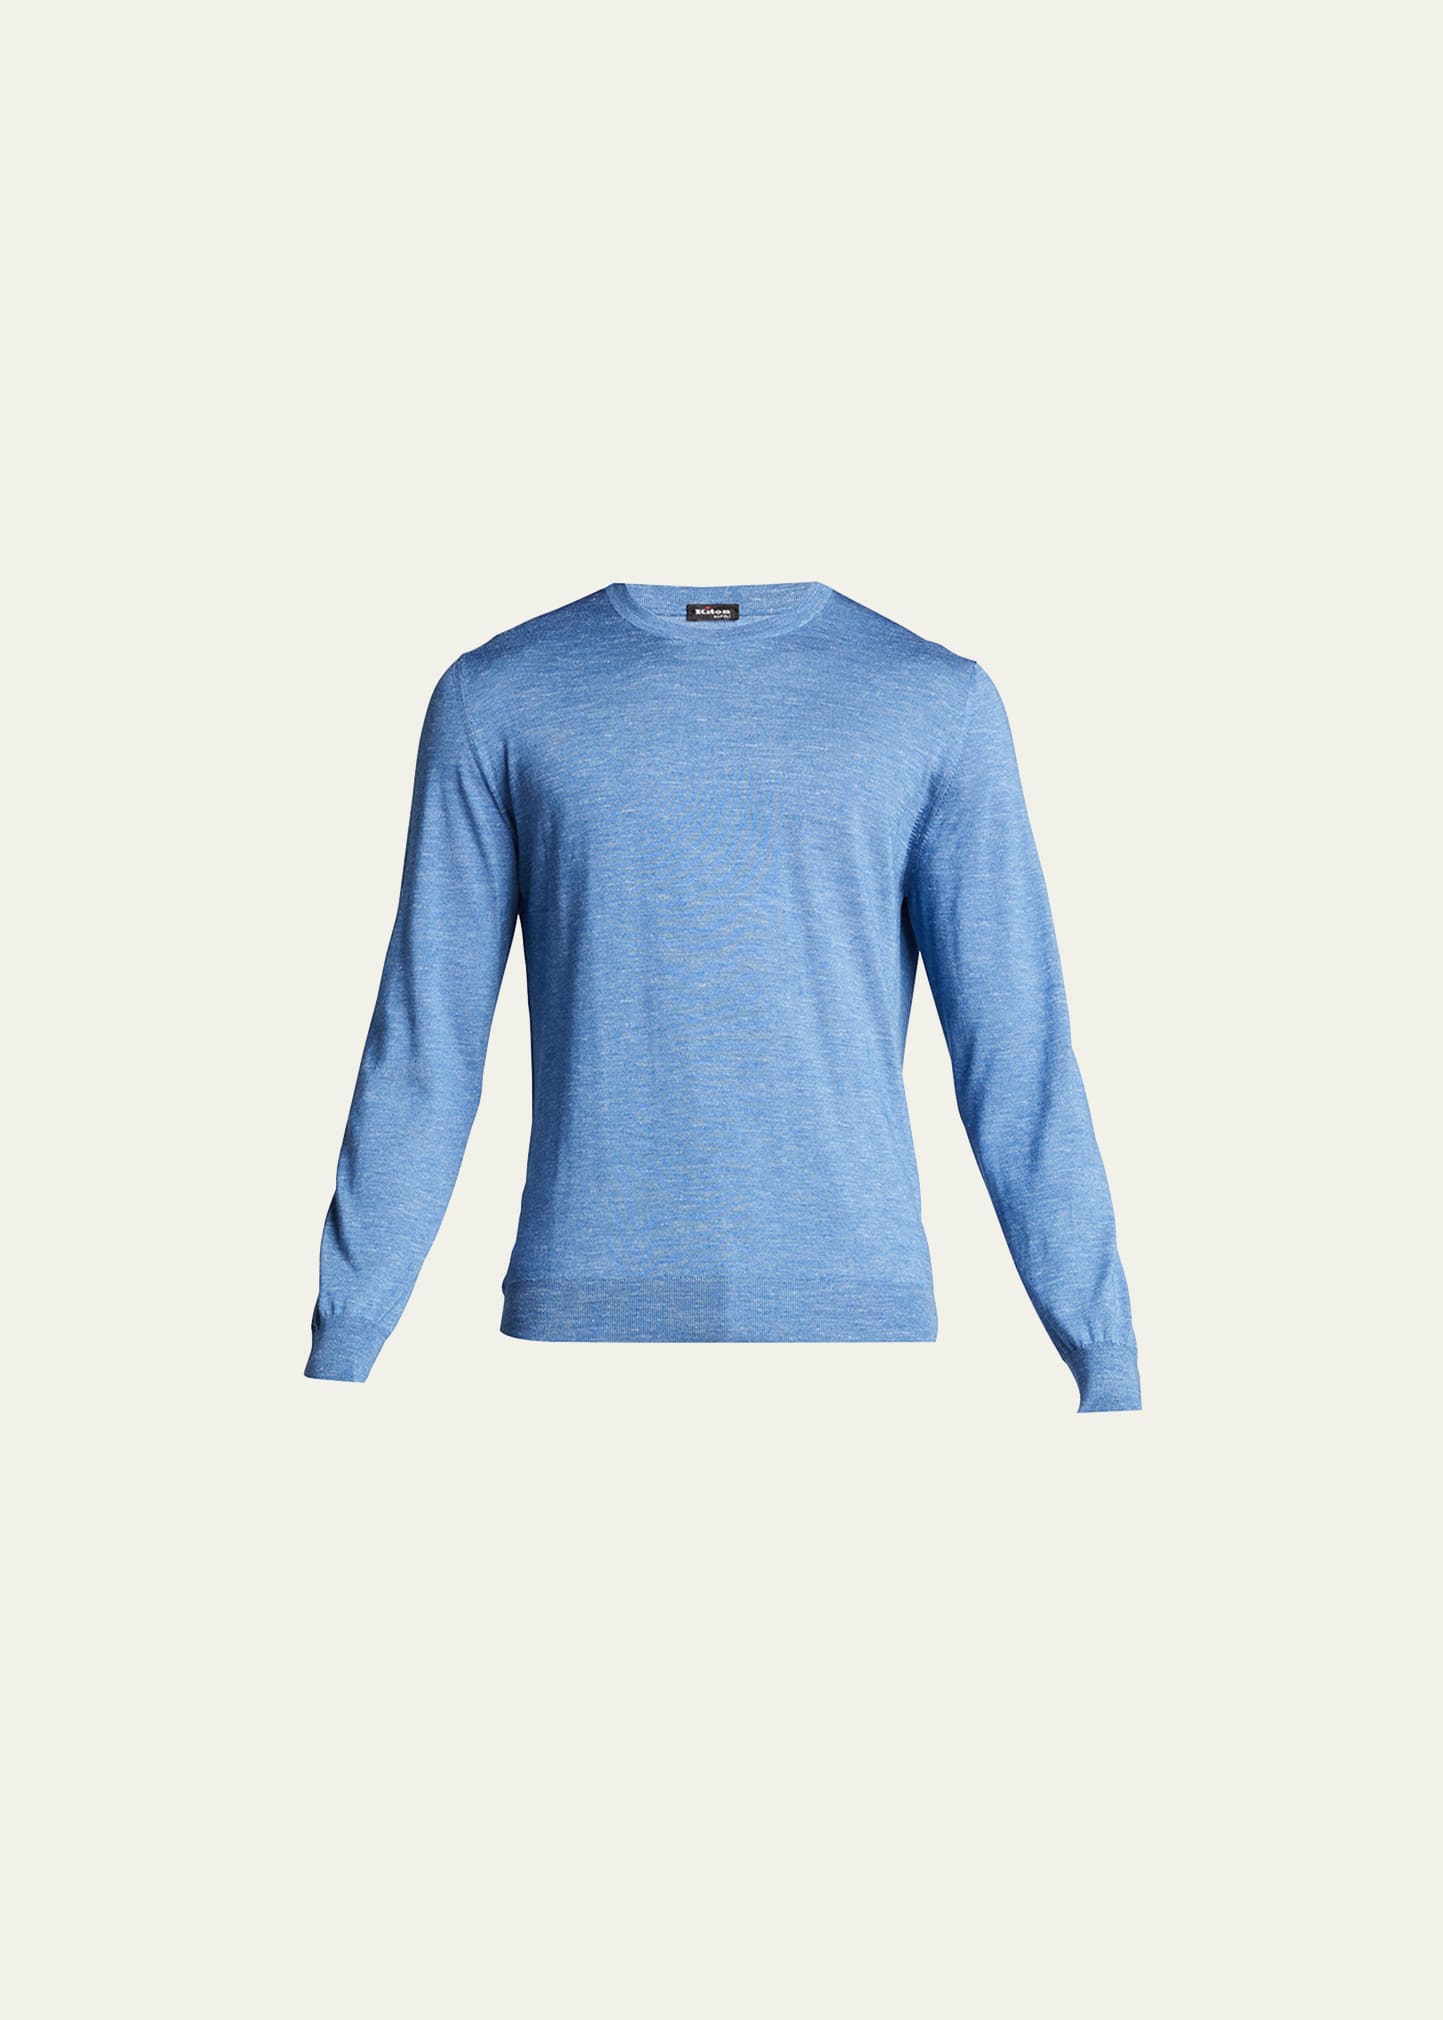 Kiton Men's Heathered Cotton Crewneck Sweater In Light Blue